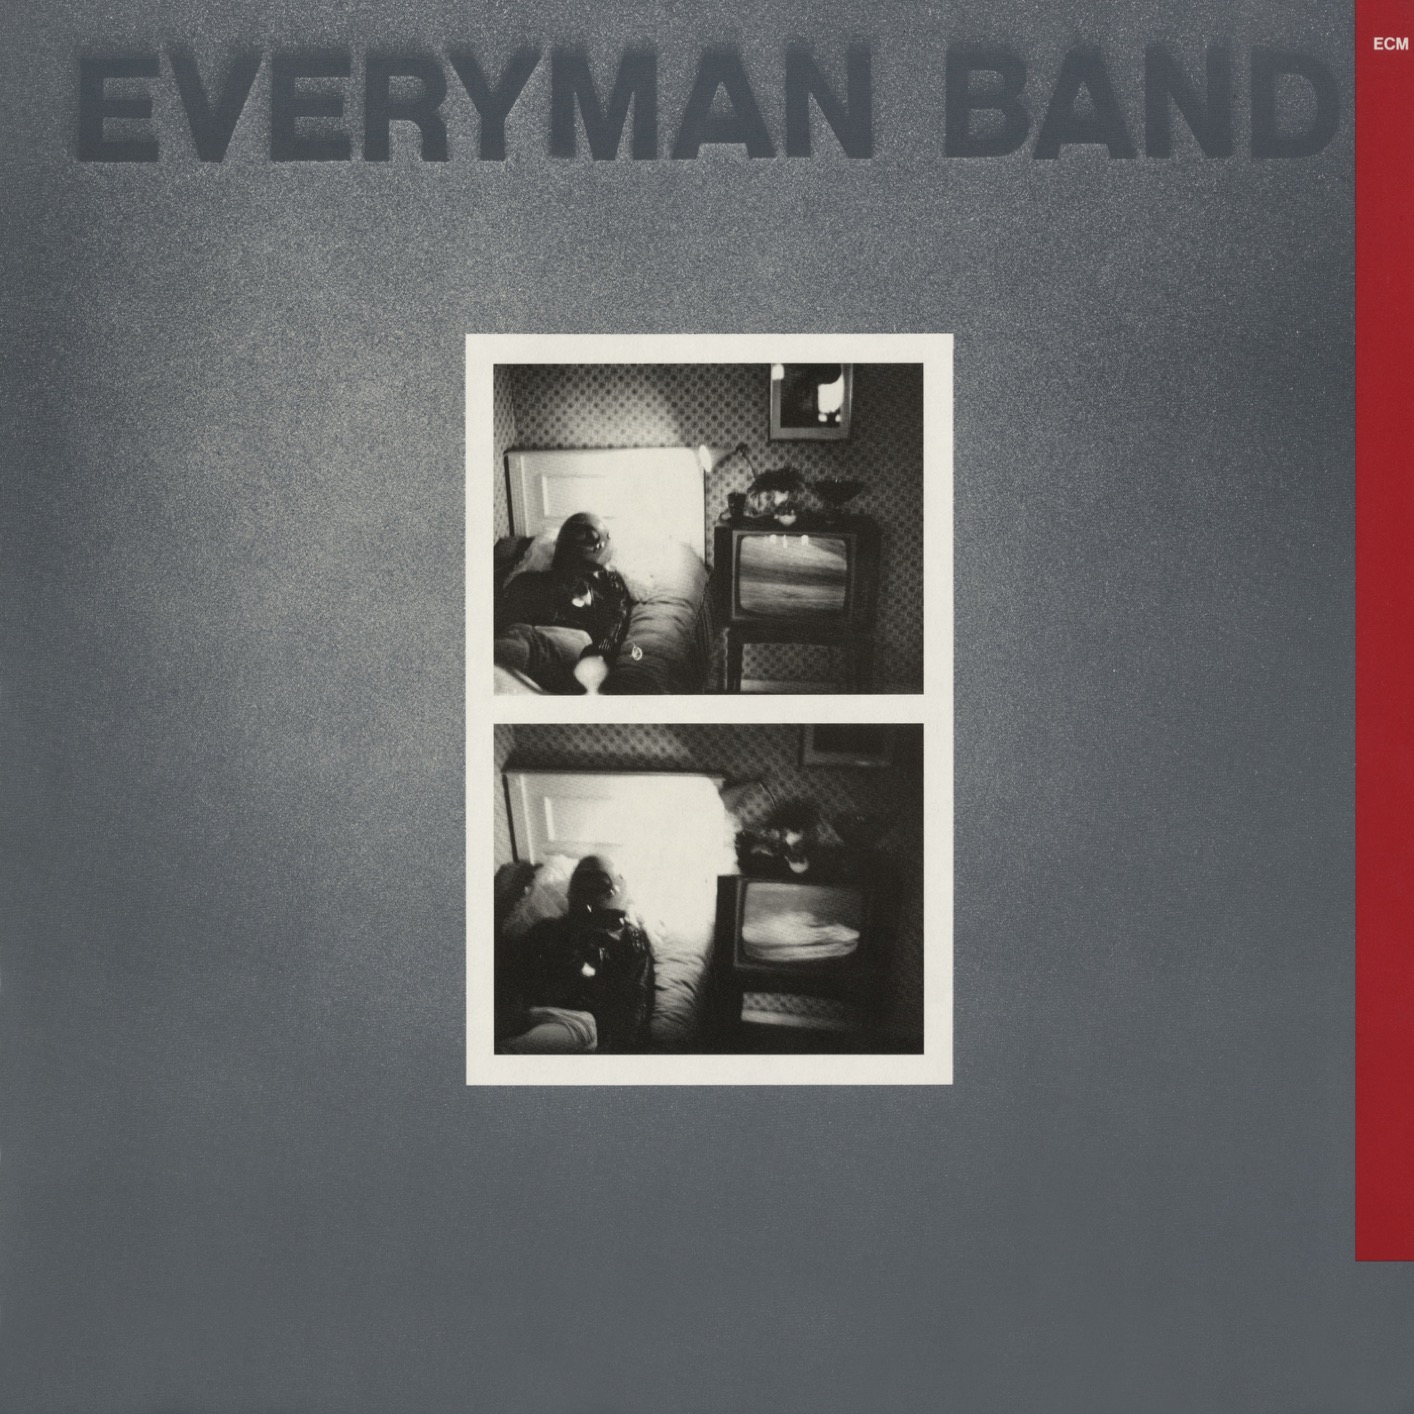 Everyman Band – Everyman Band (Remastered) (1982/2019) [FLAC 24bit/96kHz]